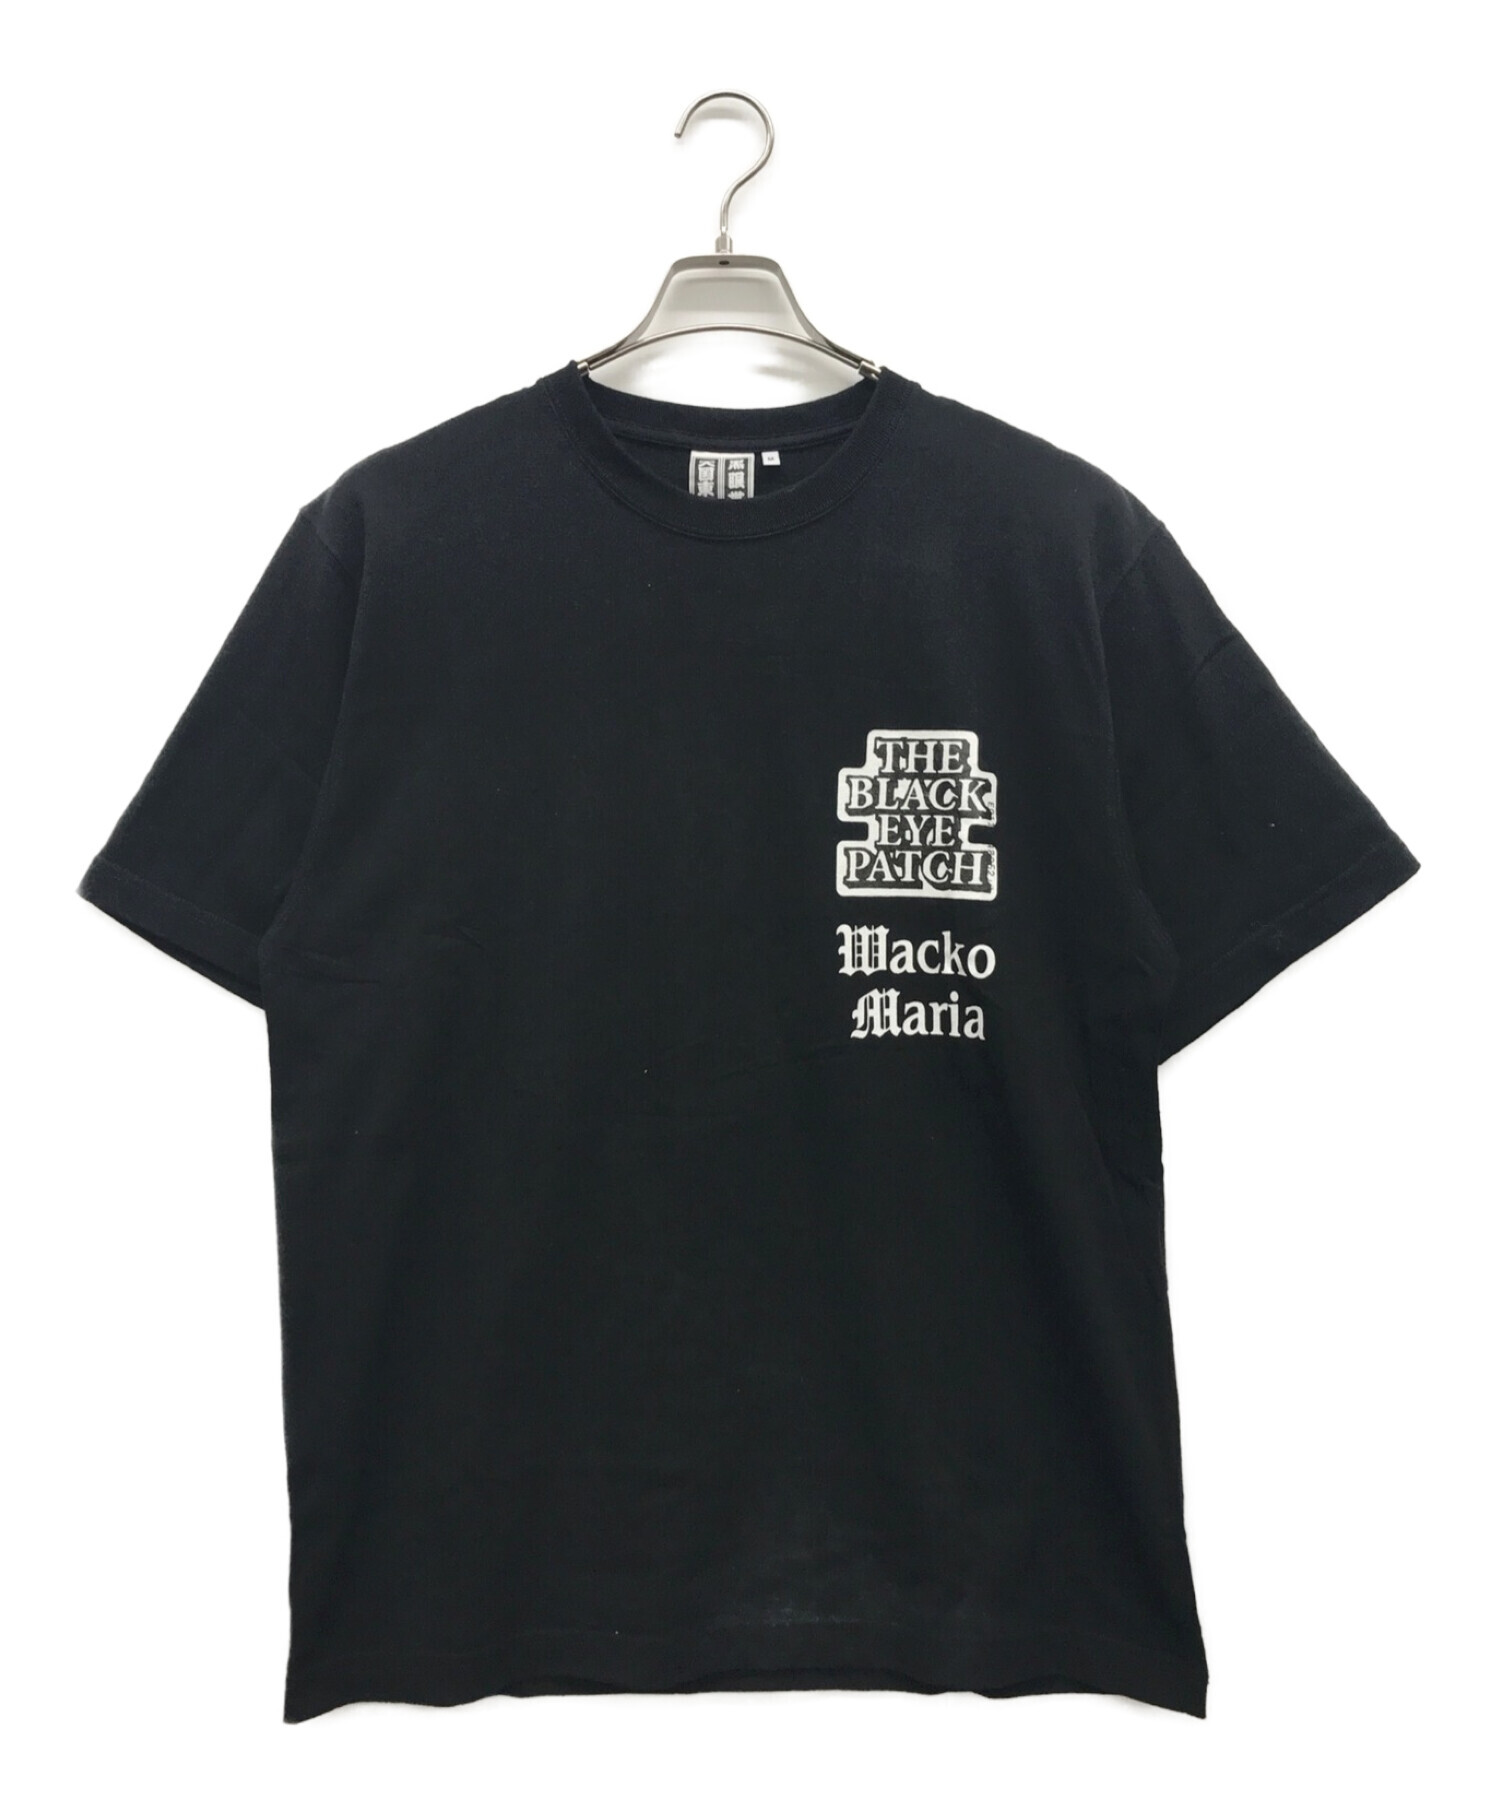 BlackEyePatch×wacko maria (ブラックアイパッチ×ワコマリア) コラボプリントTシャツ ブラック サイズ:M